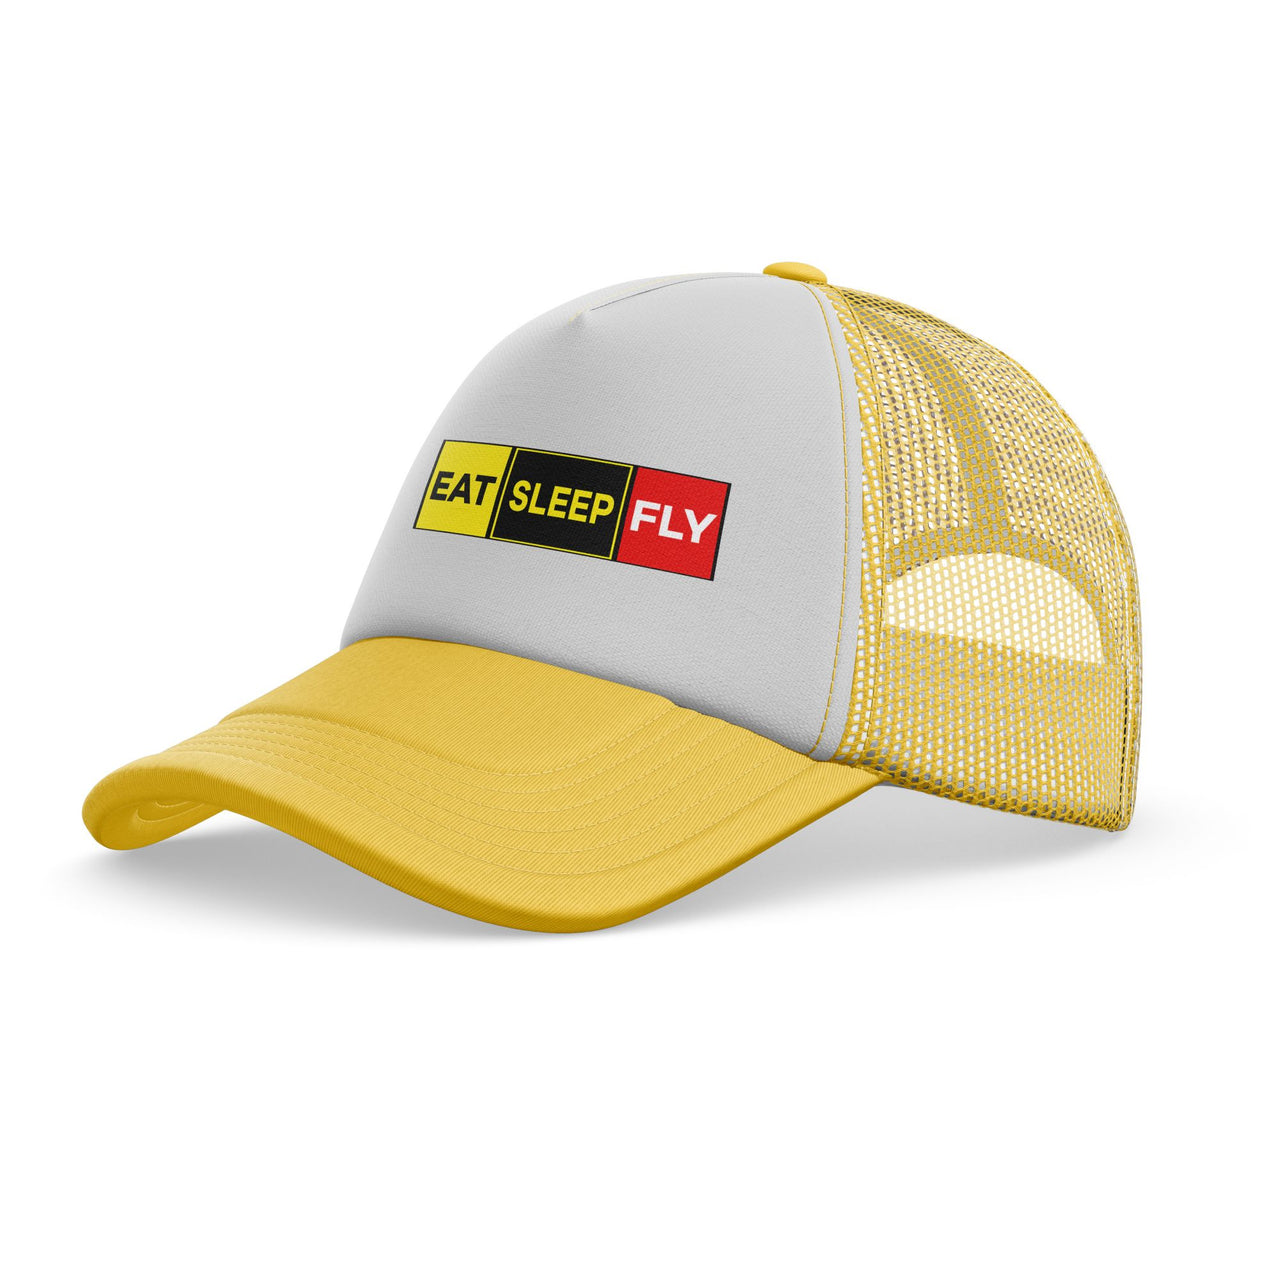 Eat Sleep Fly (Colourful) Designed Trucker Caps & Hats